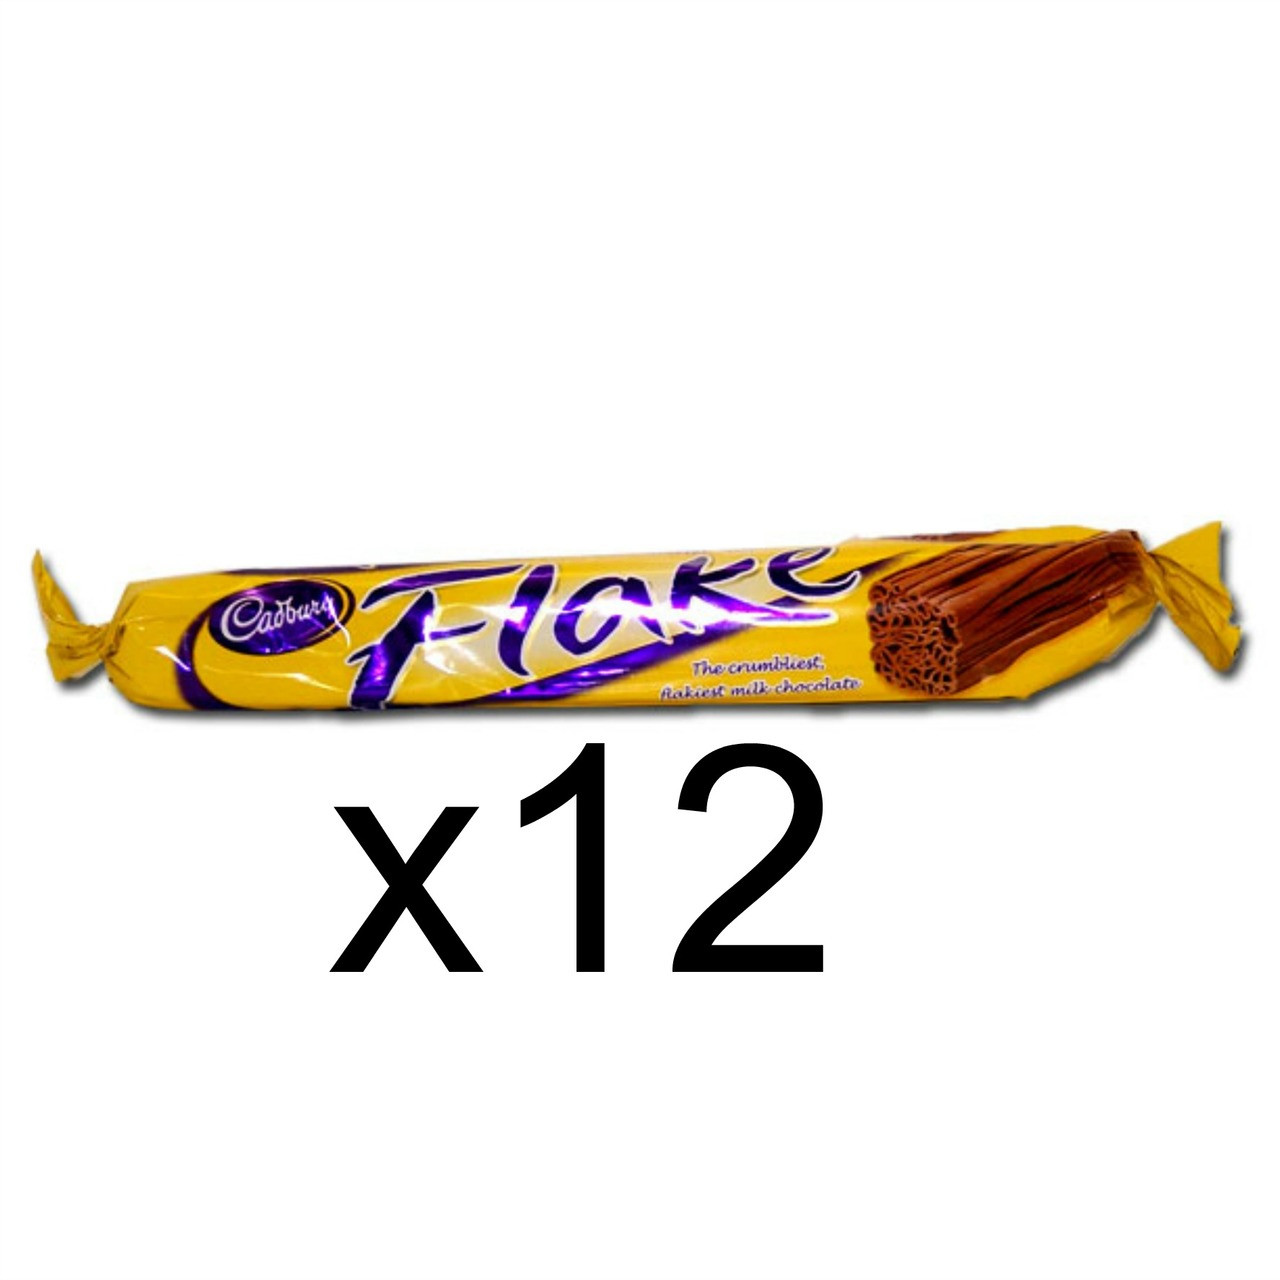 Cadbury Flake Bar | Total 4 bars of British Chocolate Candy - Cadbury Flake